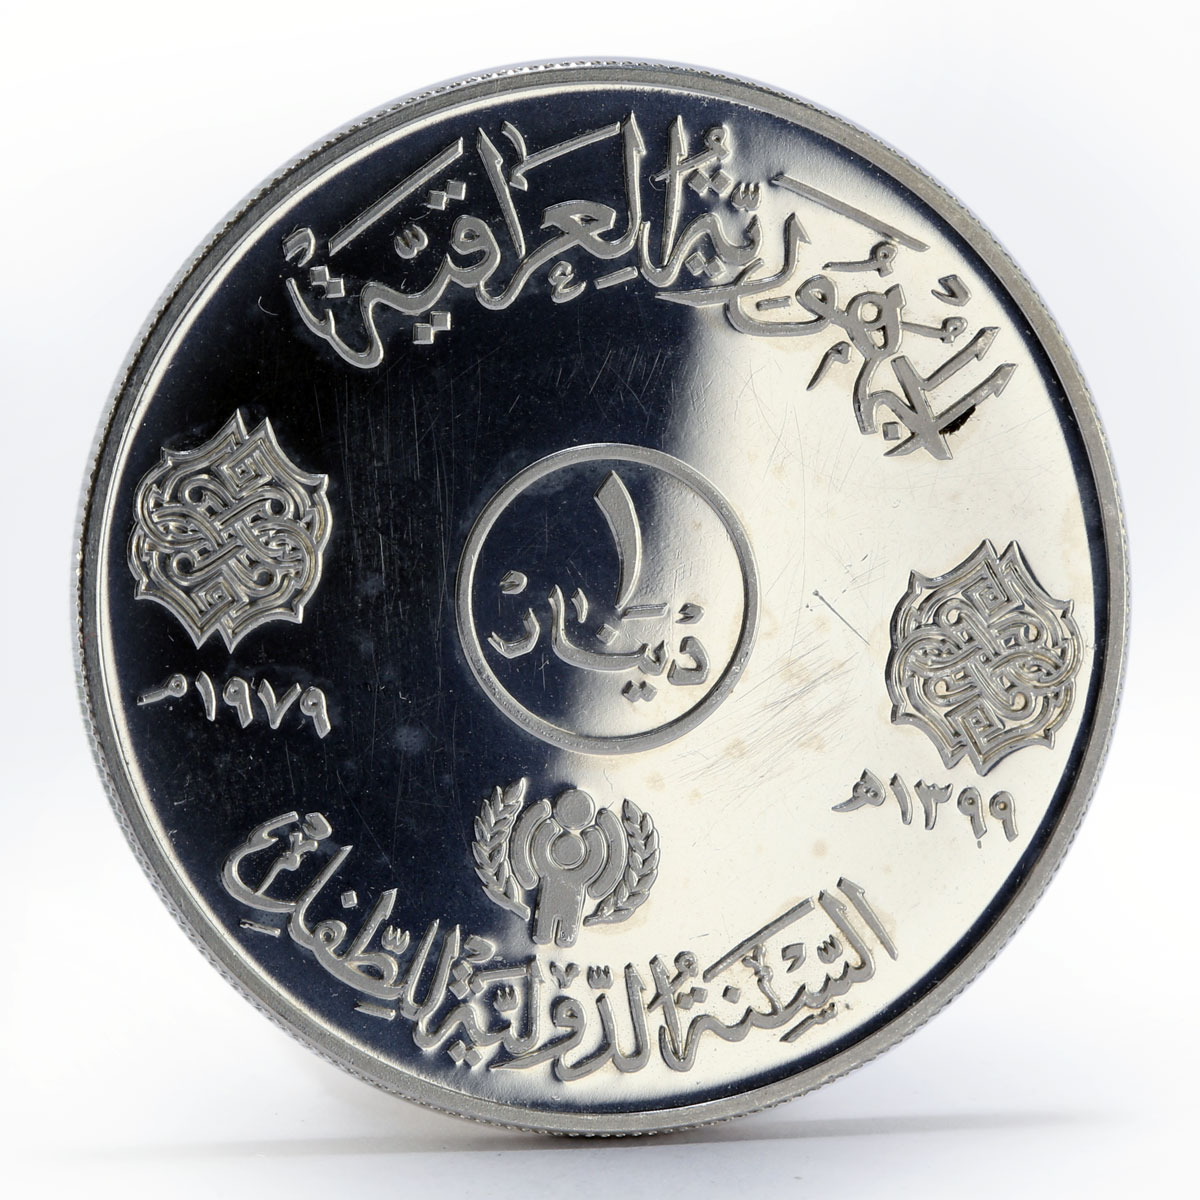 Iraq 1 Dinar International Year of Child proof nickel coin 1979